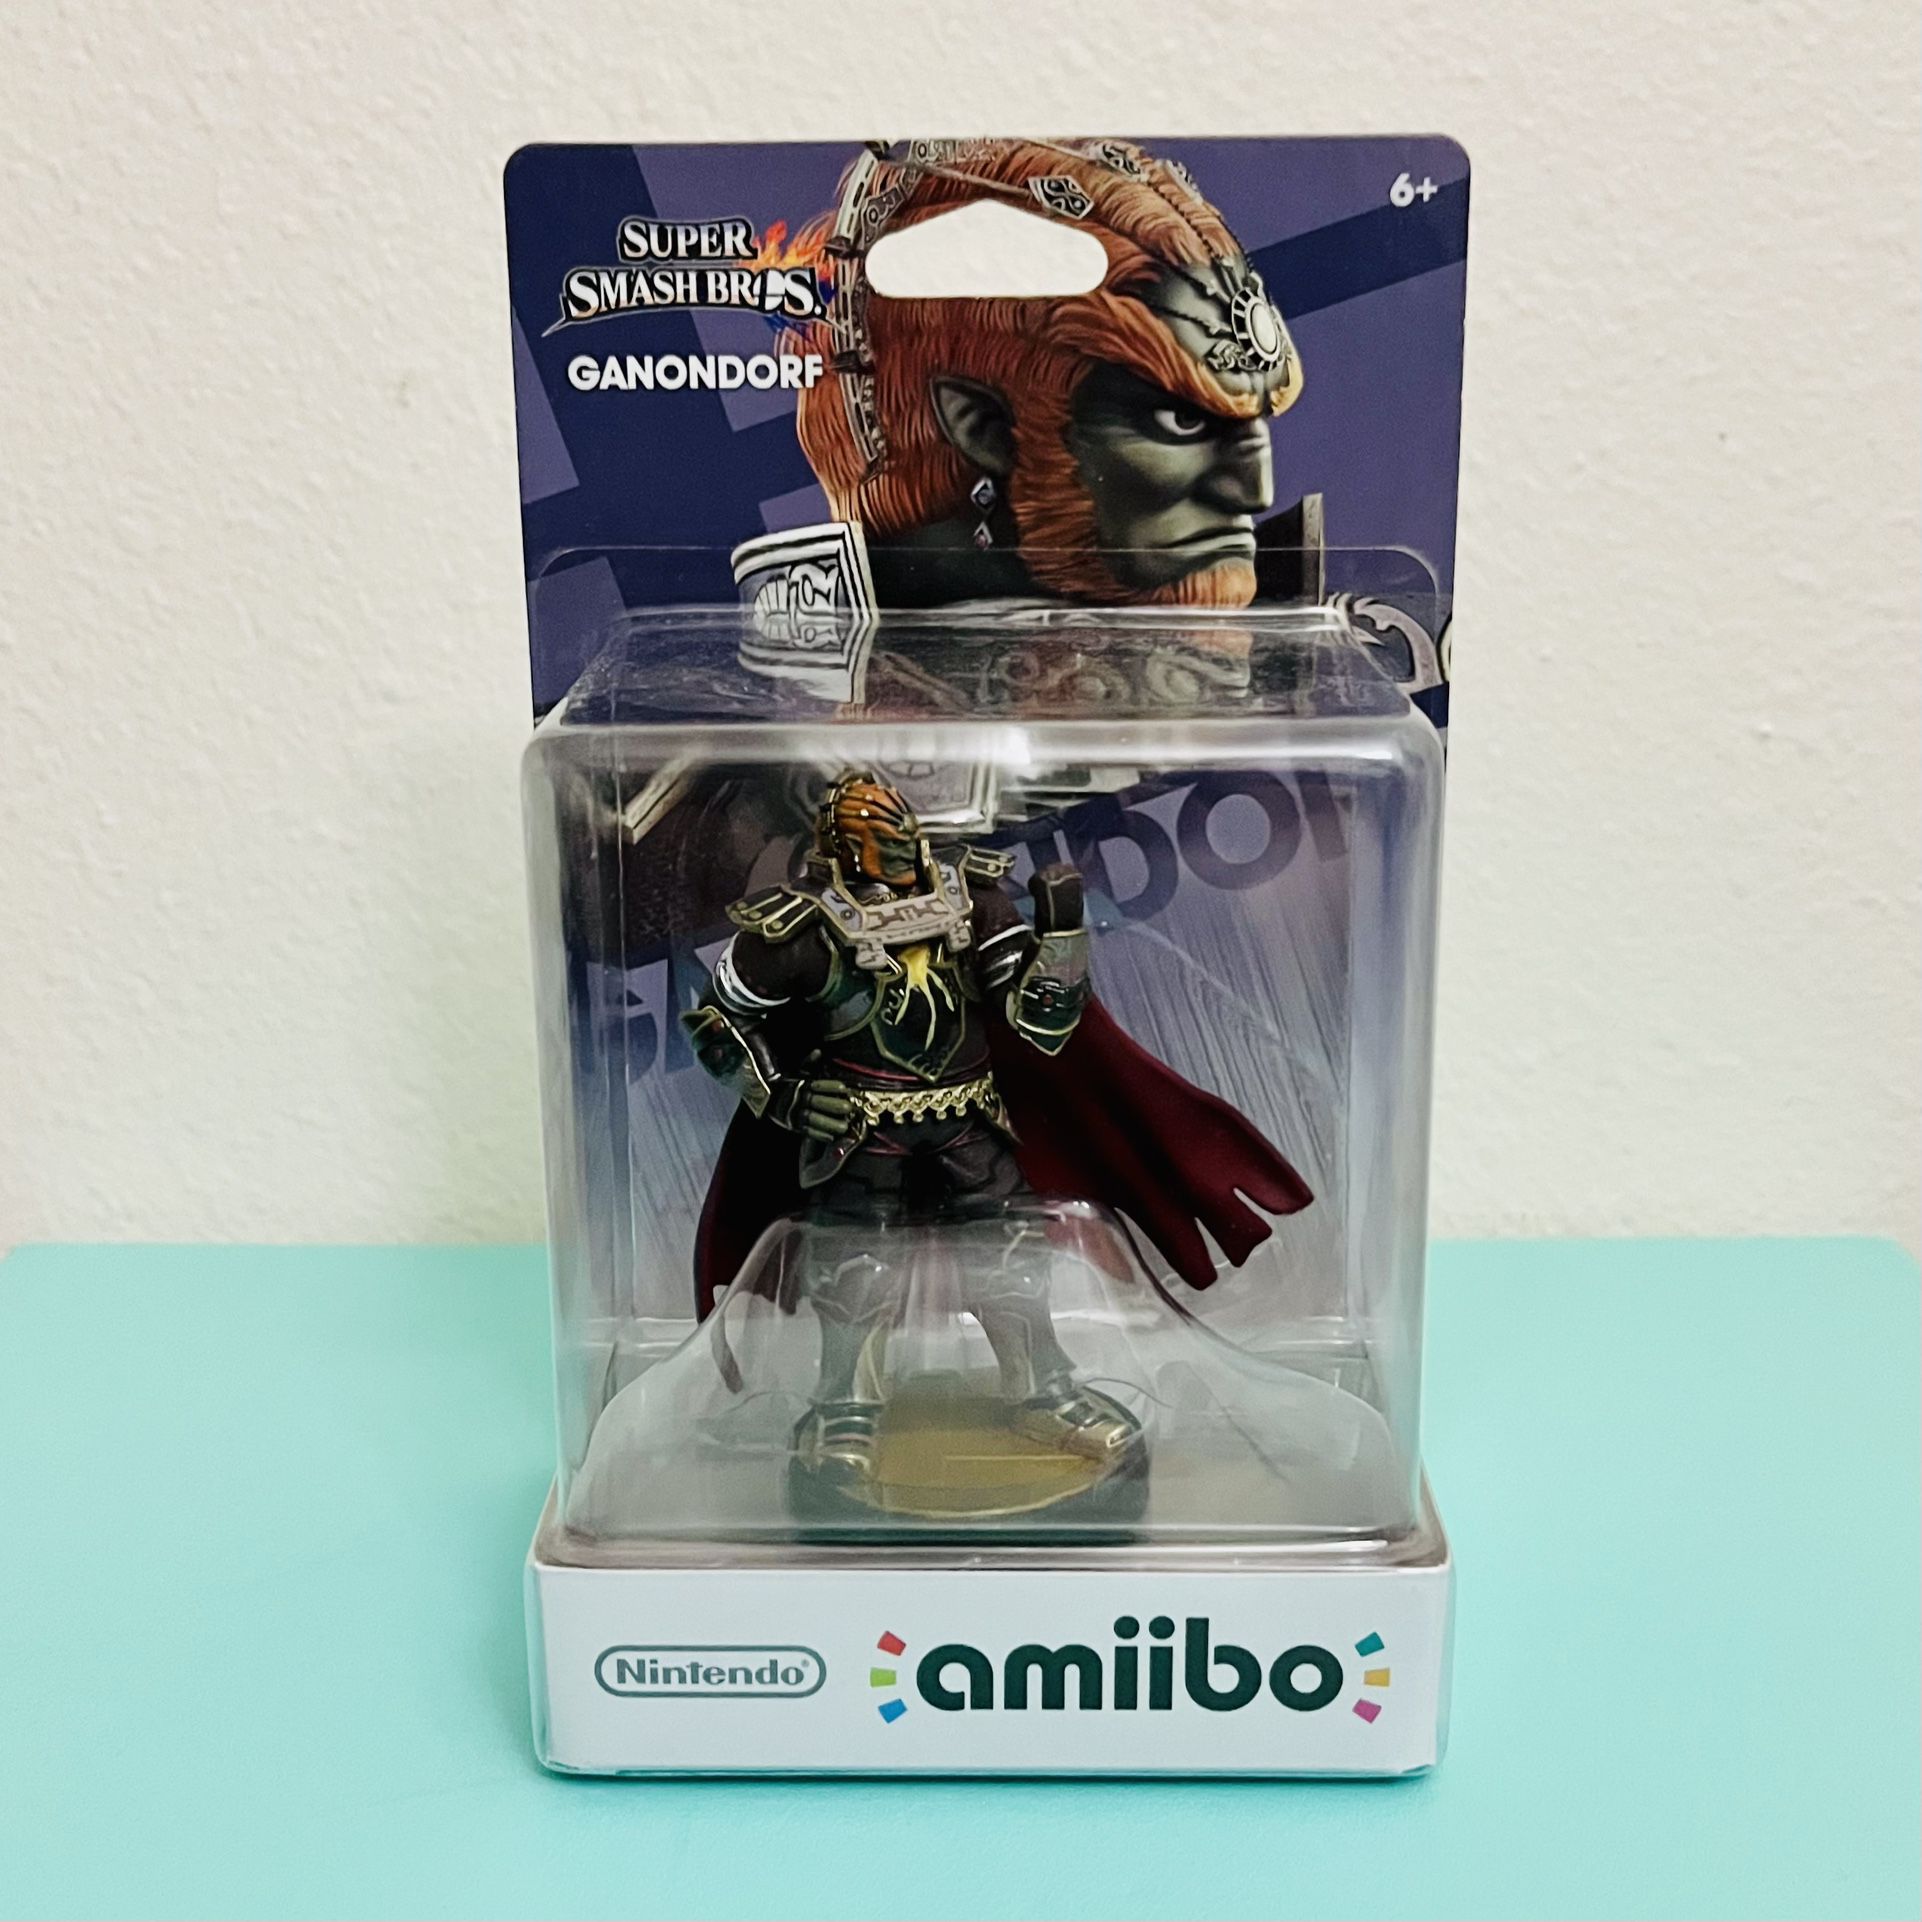 Ganondorf amiibo Figure - Super Smash Bros. Series (Nintendo, 2015) First Print!